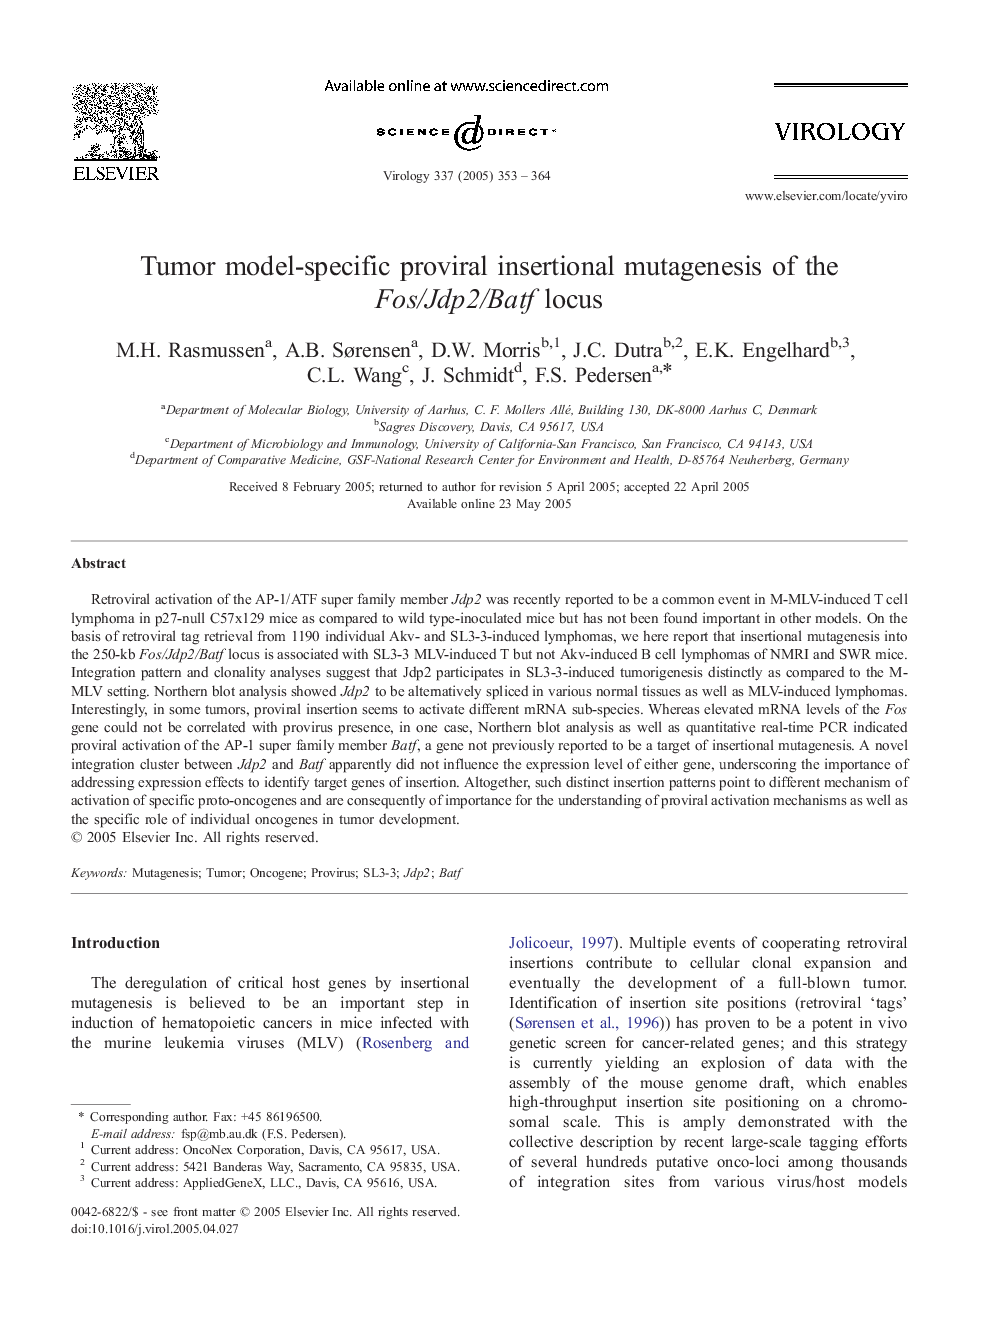 Tumor model-specific proviral insertional mutagenesis of the Fos/Jdp2/Batf locus